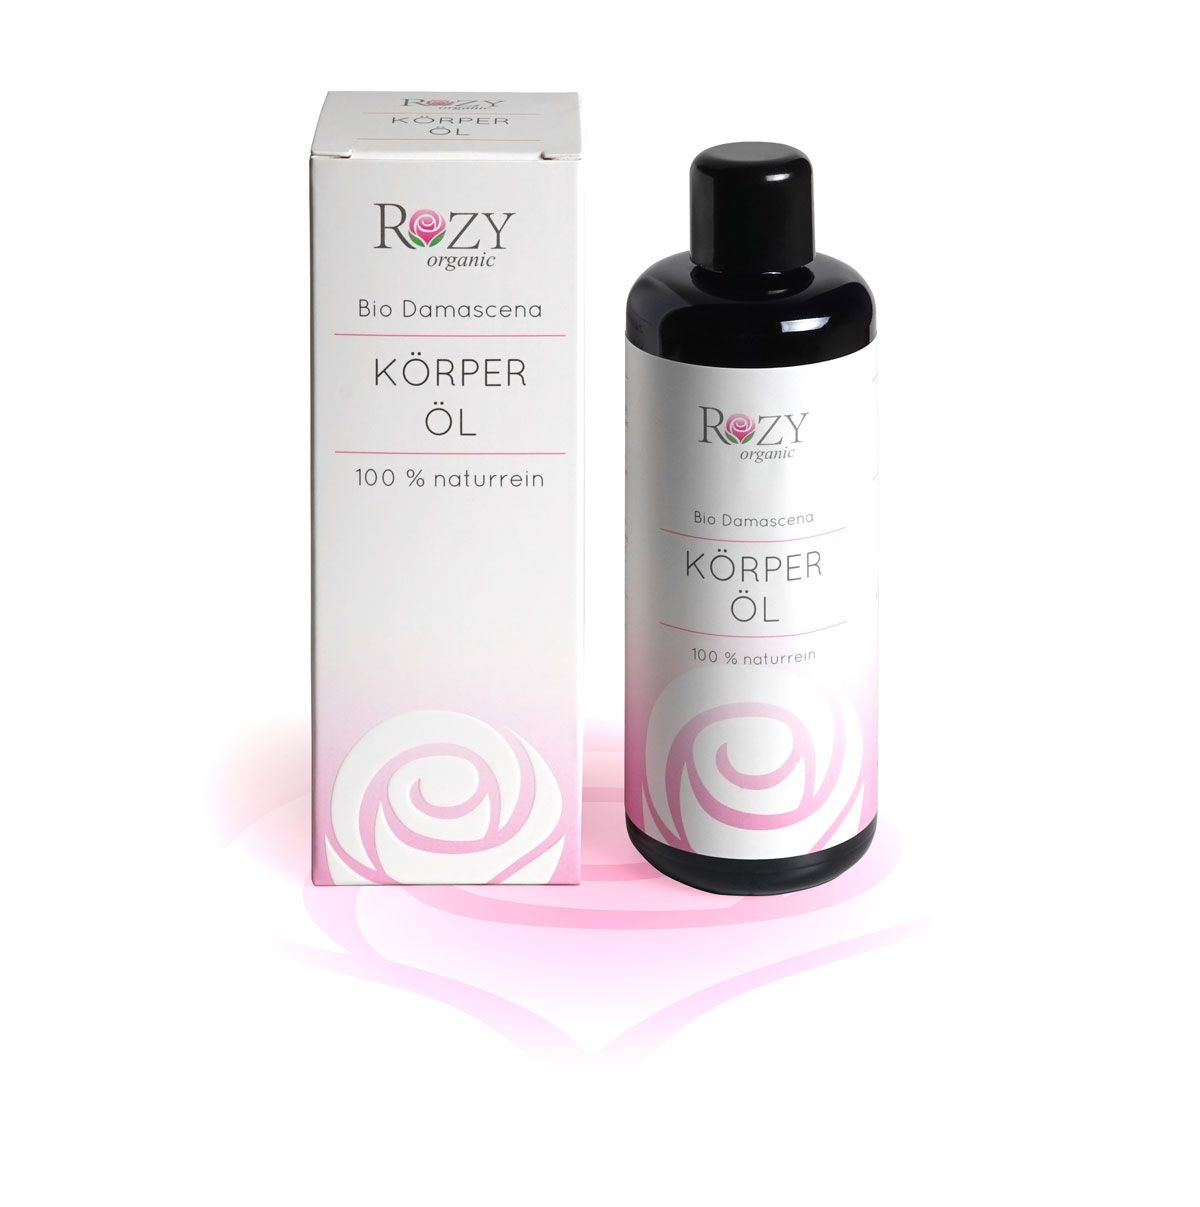 Kosmetik Packaging: Körperöl und Umverpackung Rozy organic